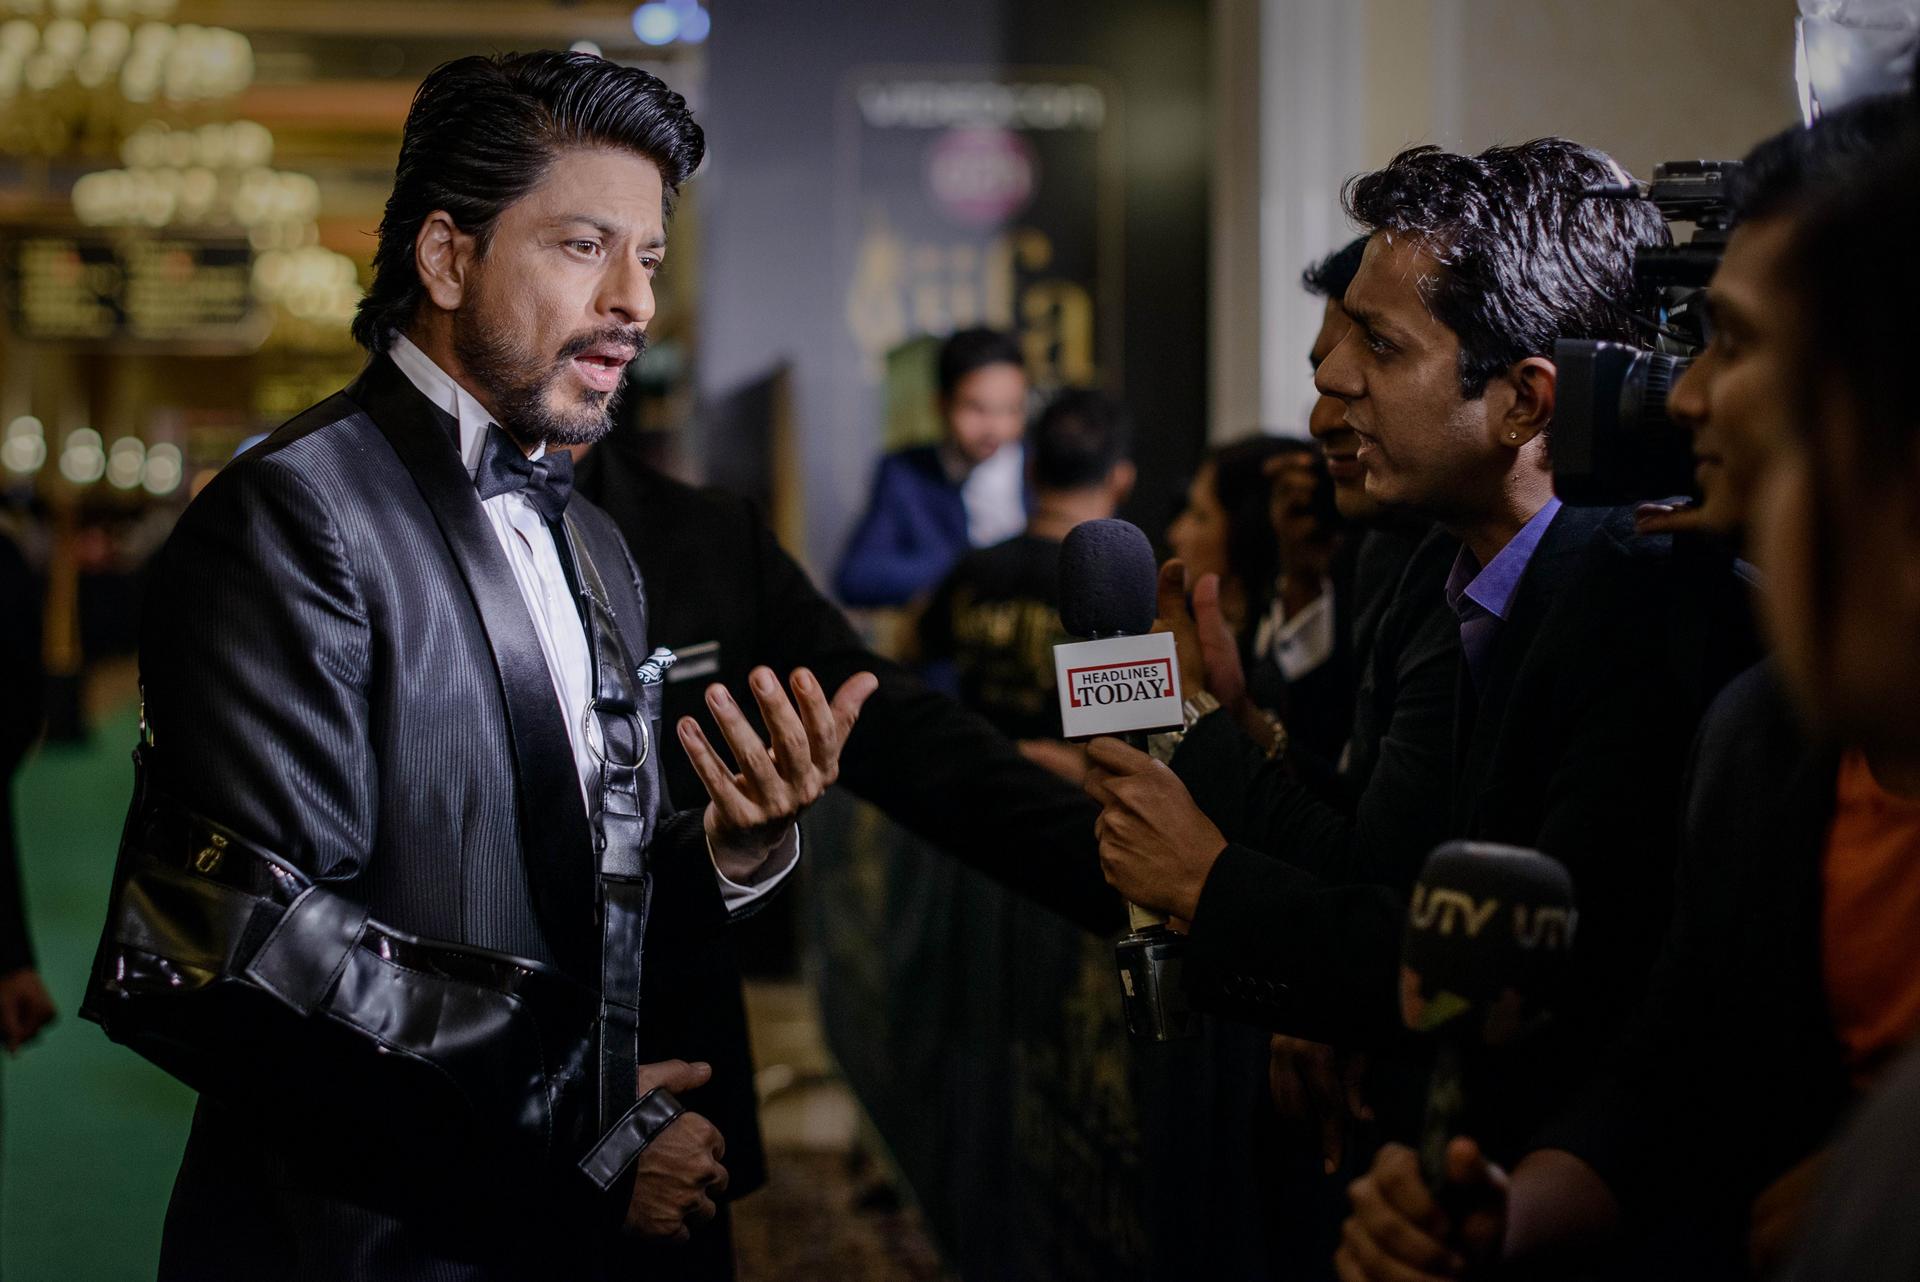 Shah Rukh Khan in Macau, where he co-hosted the 14th International Indian Film Academy awards. Photos: AFP, Avinash Nath Gupta